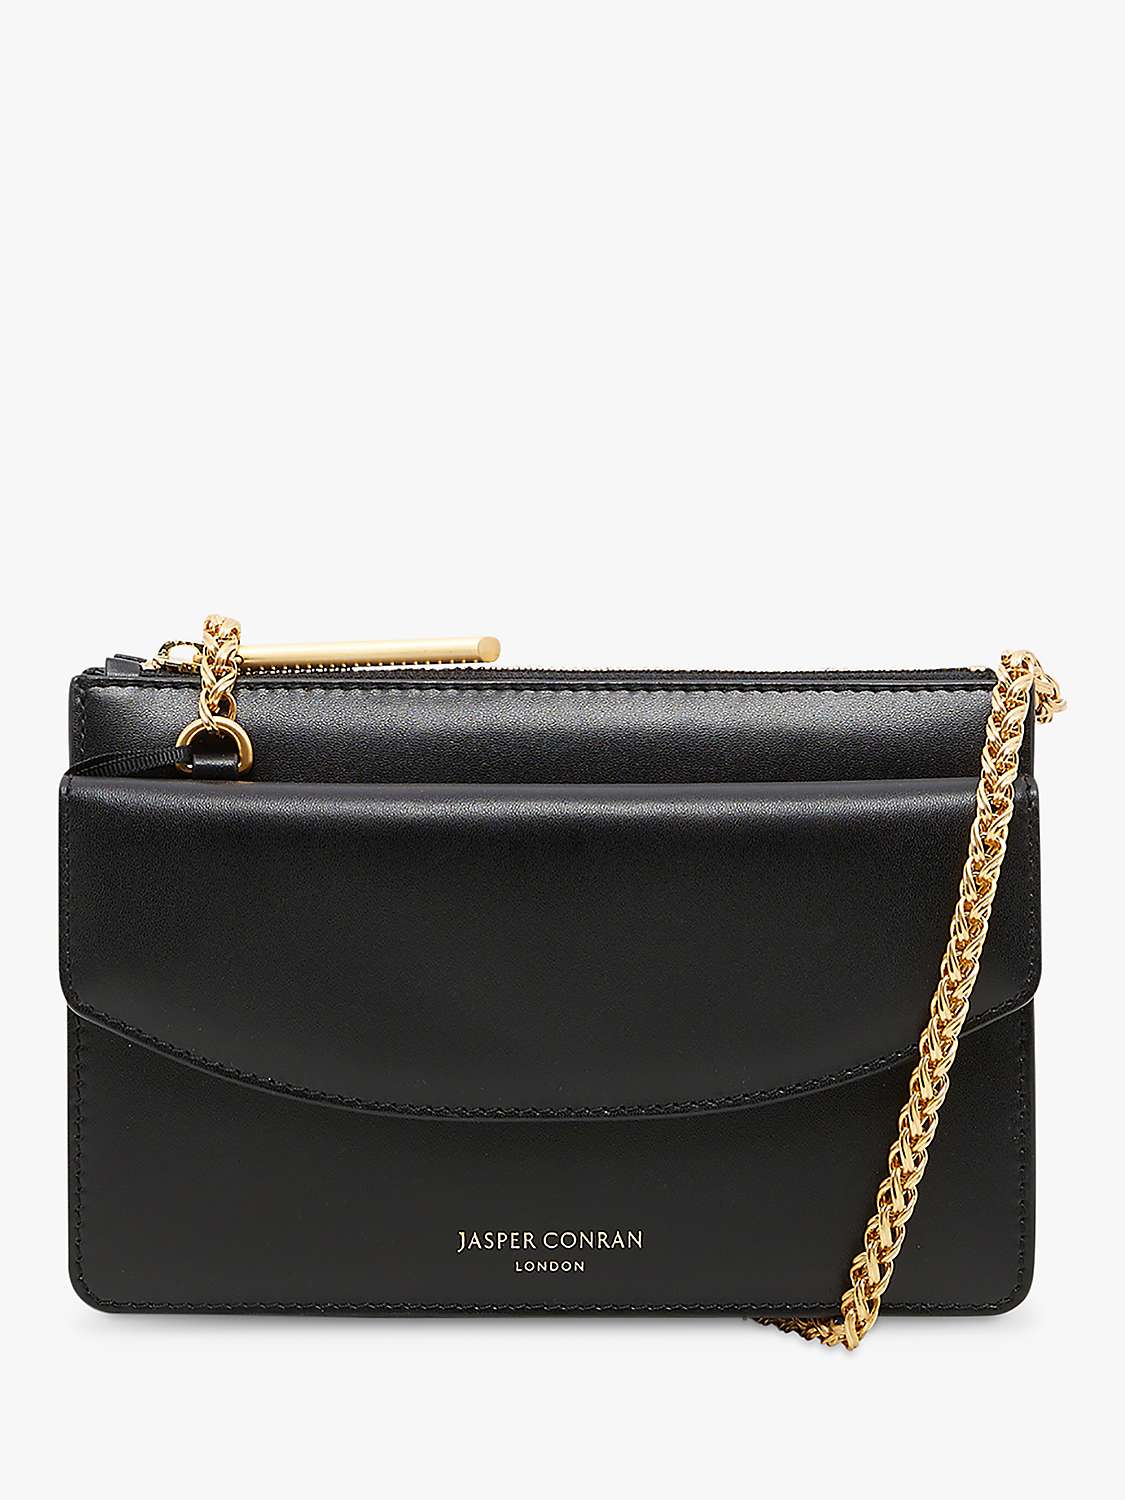 Buy Jasper Conran London Francine Chain Strap Crossbody Leather Bag Online at johnlewis.com